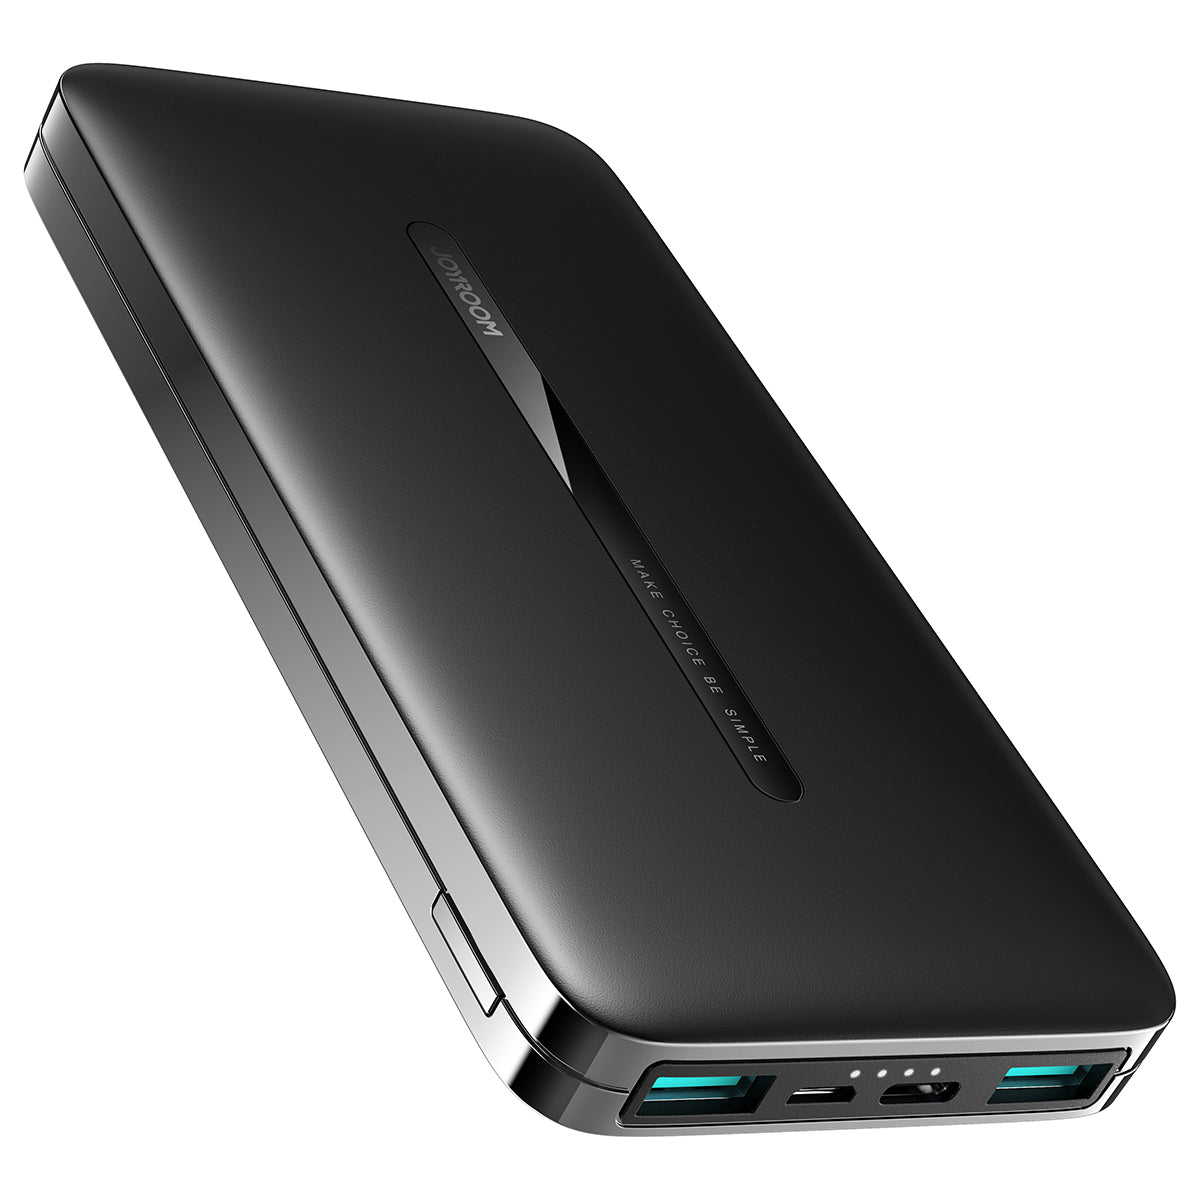 JOYROOM dual USB Power Bank 10000mah - Black